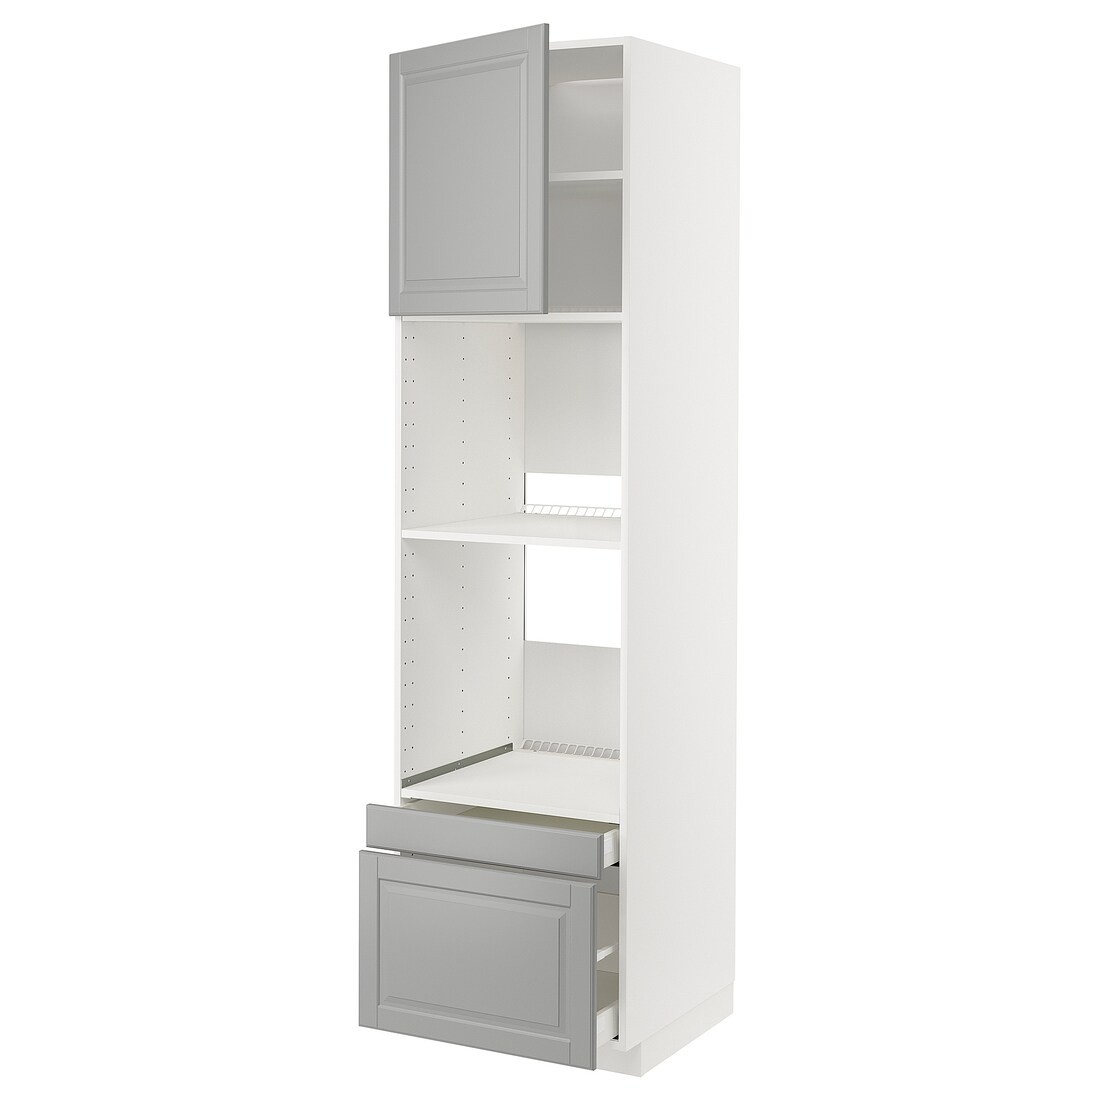 IKEA METOD МЕТОД / MAXIMERA МАКСИМЕРА Высокий шкаф для духовки комби с дверцей / ящиками, белый / Bodbyn серый, 60x60x220 см 29457348 | 294.573.48